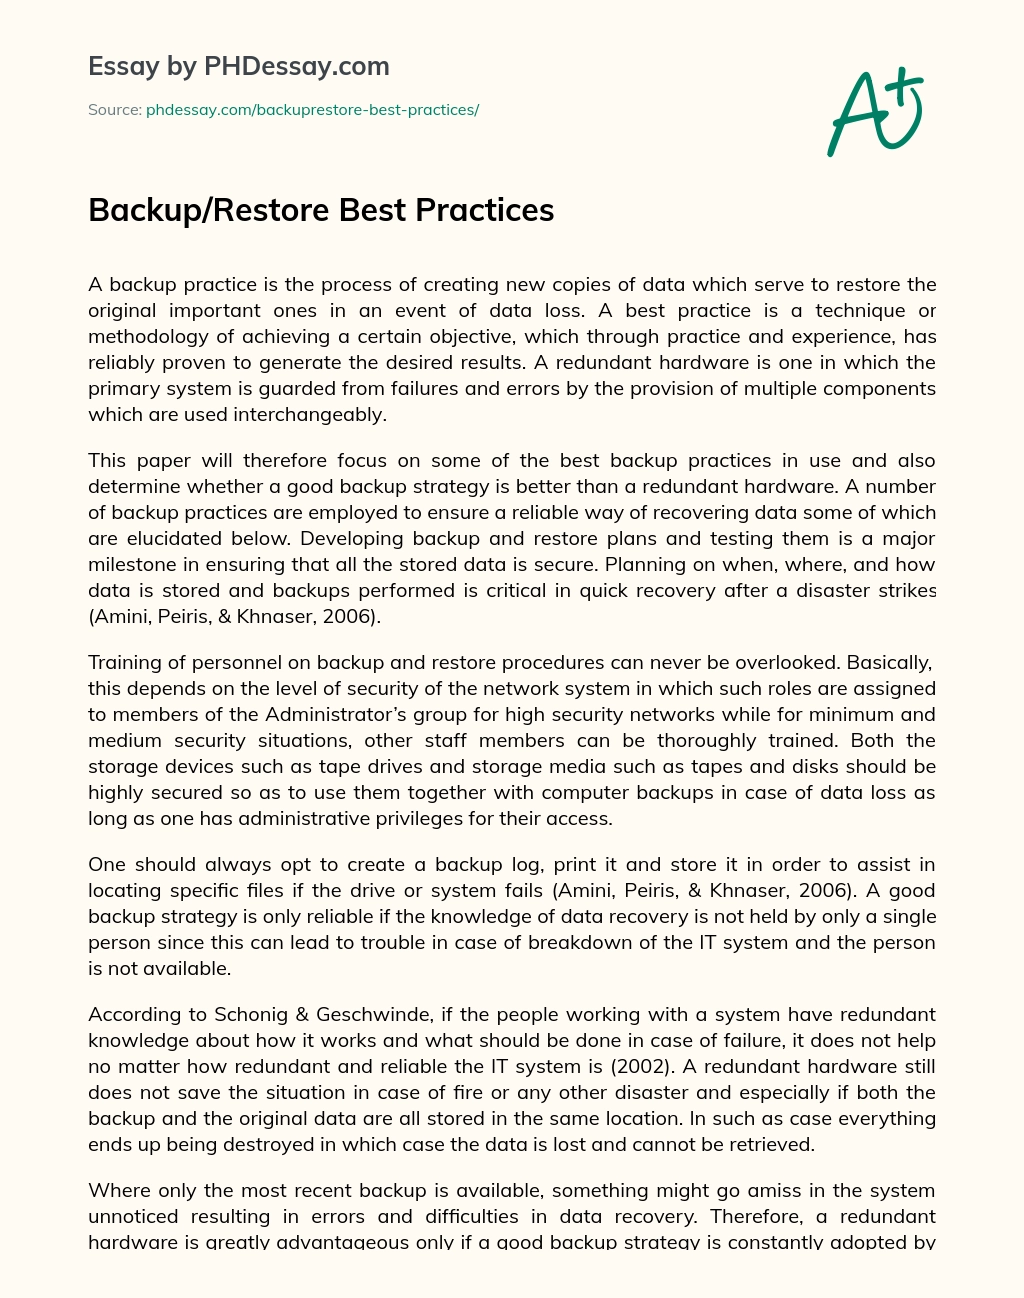 Backup/Restore Best Practices essay